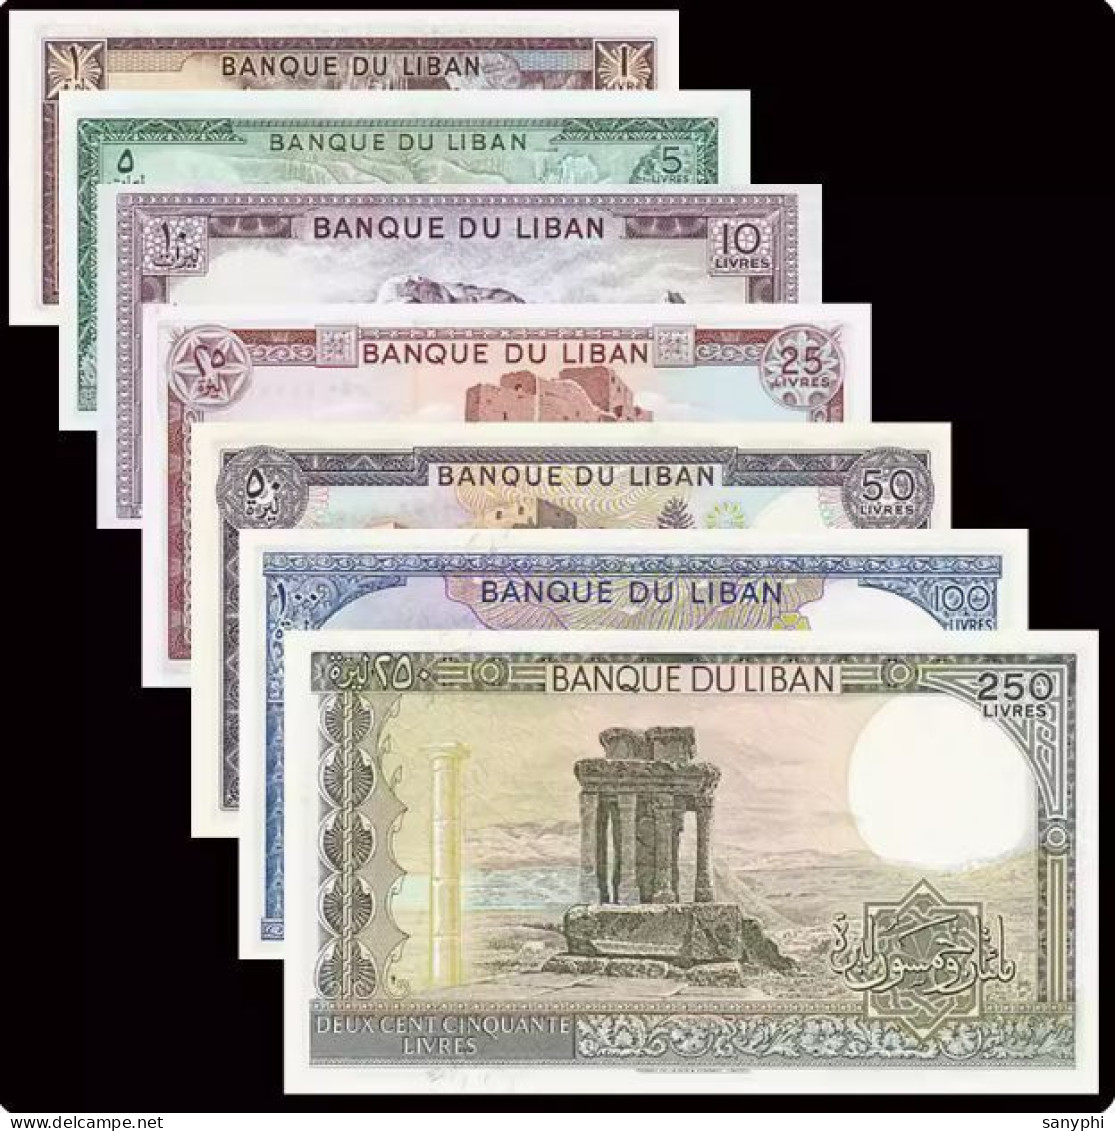 Banque Du Liban 7 Banknotes 1-250 Livres - Lebanon